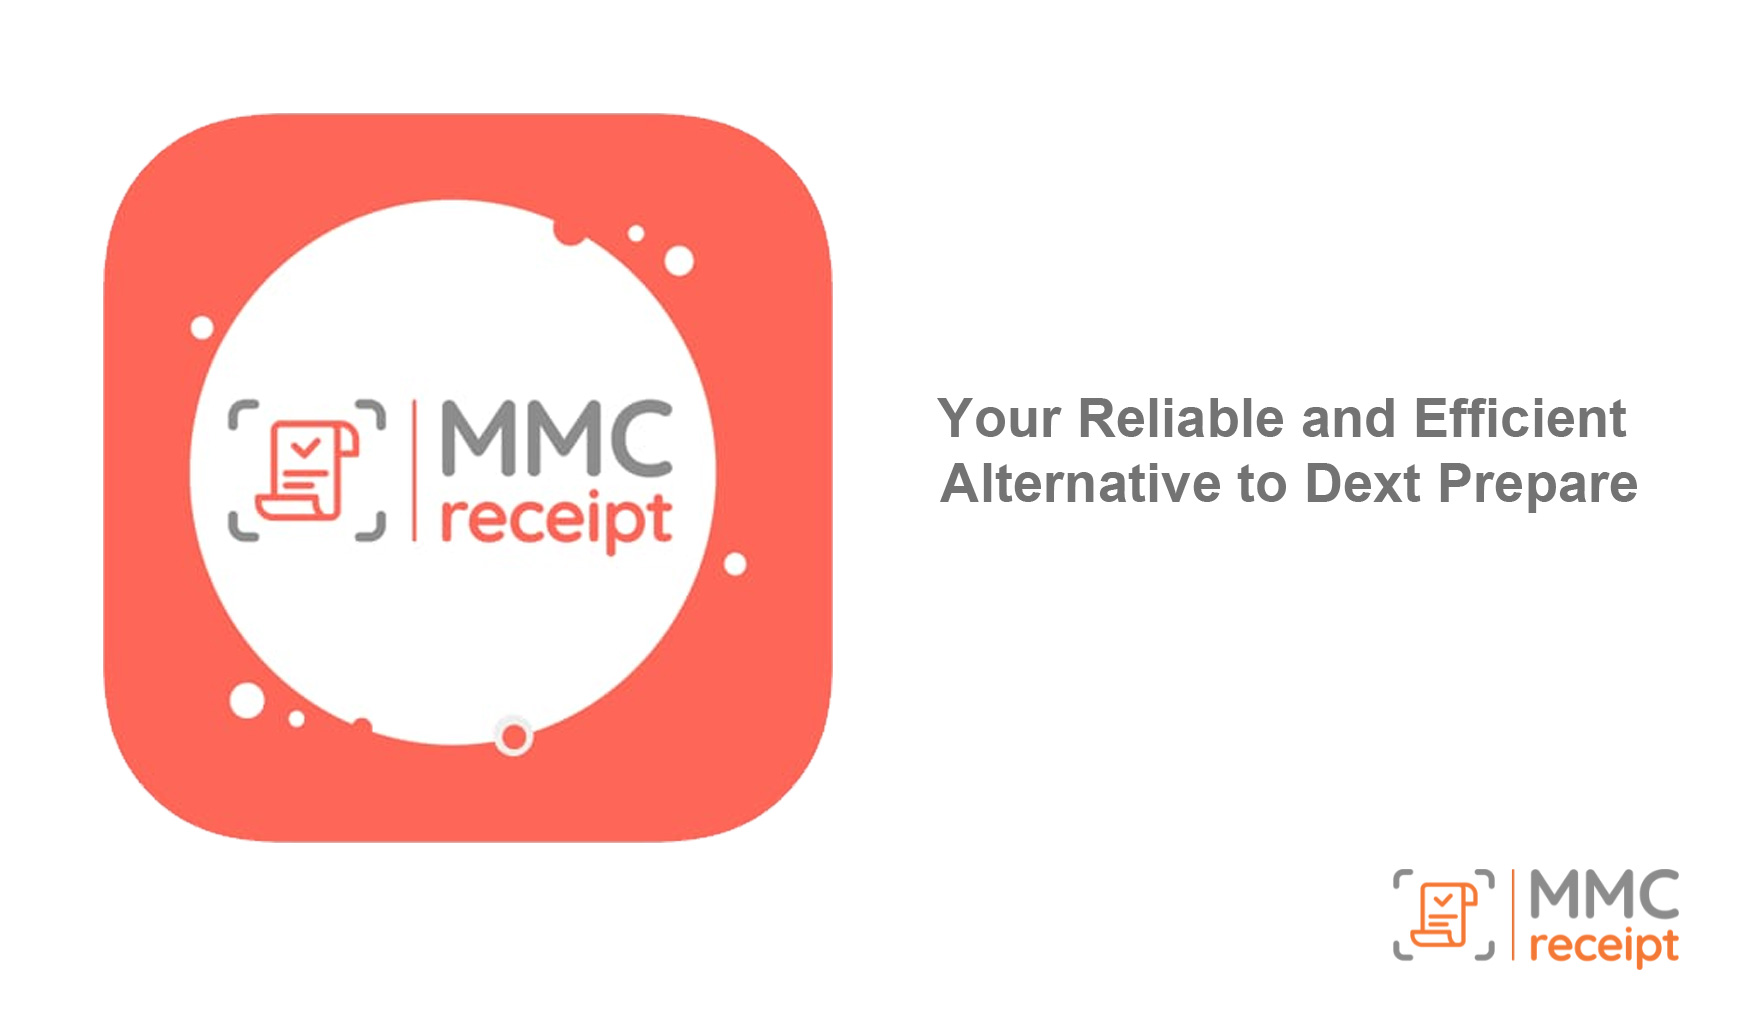 MMC Receipt: Your Reliable and Efficient Alternative to Dext Prepare